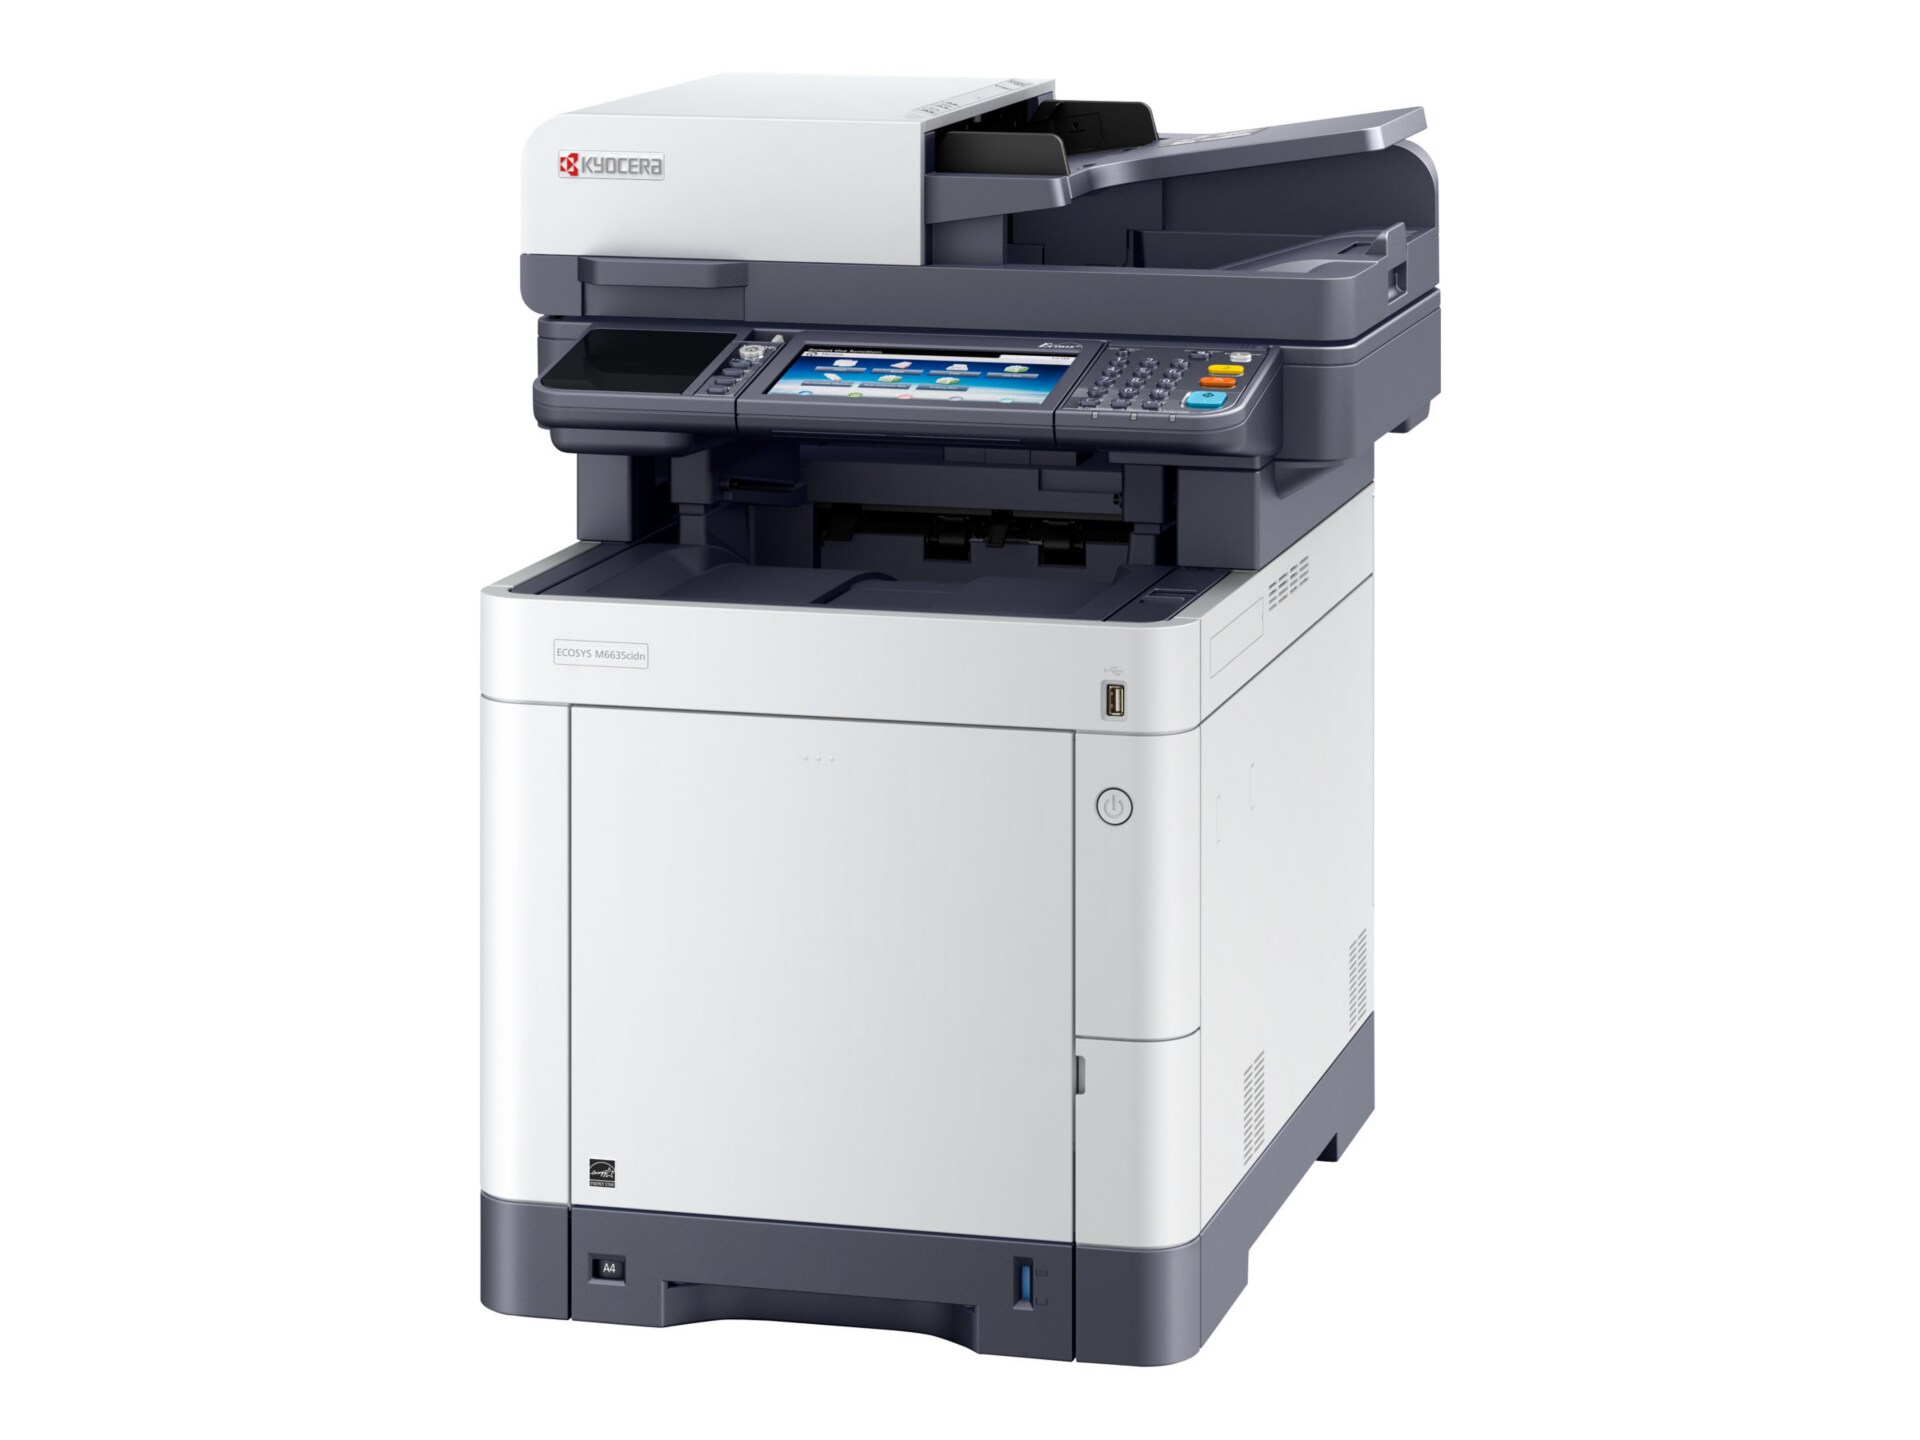 Kyocera ECOSYS M6635cidn - multifunction printer - color